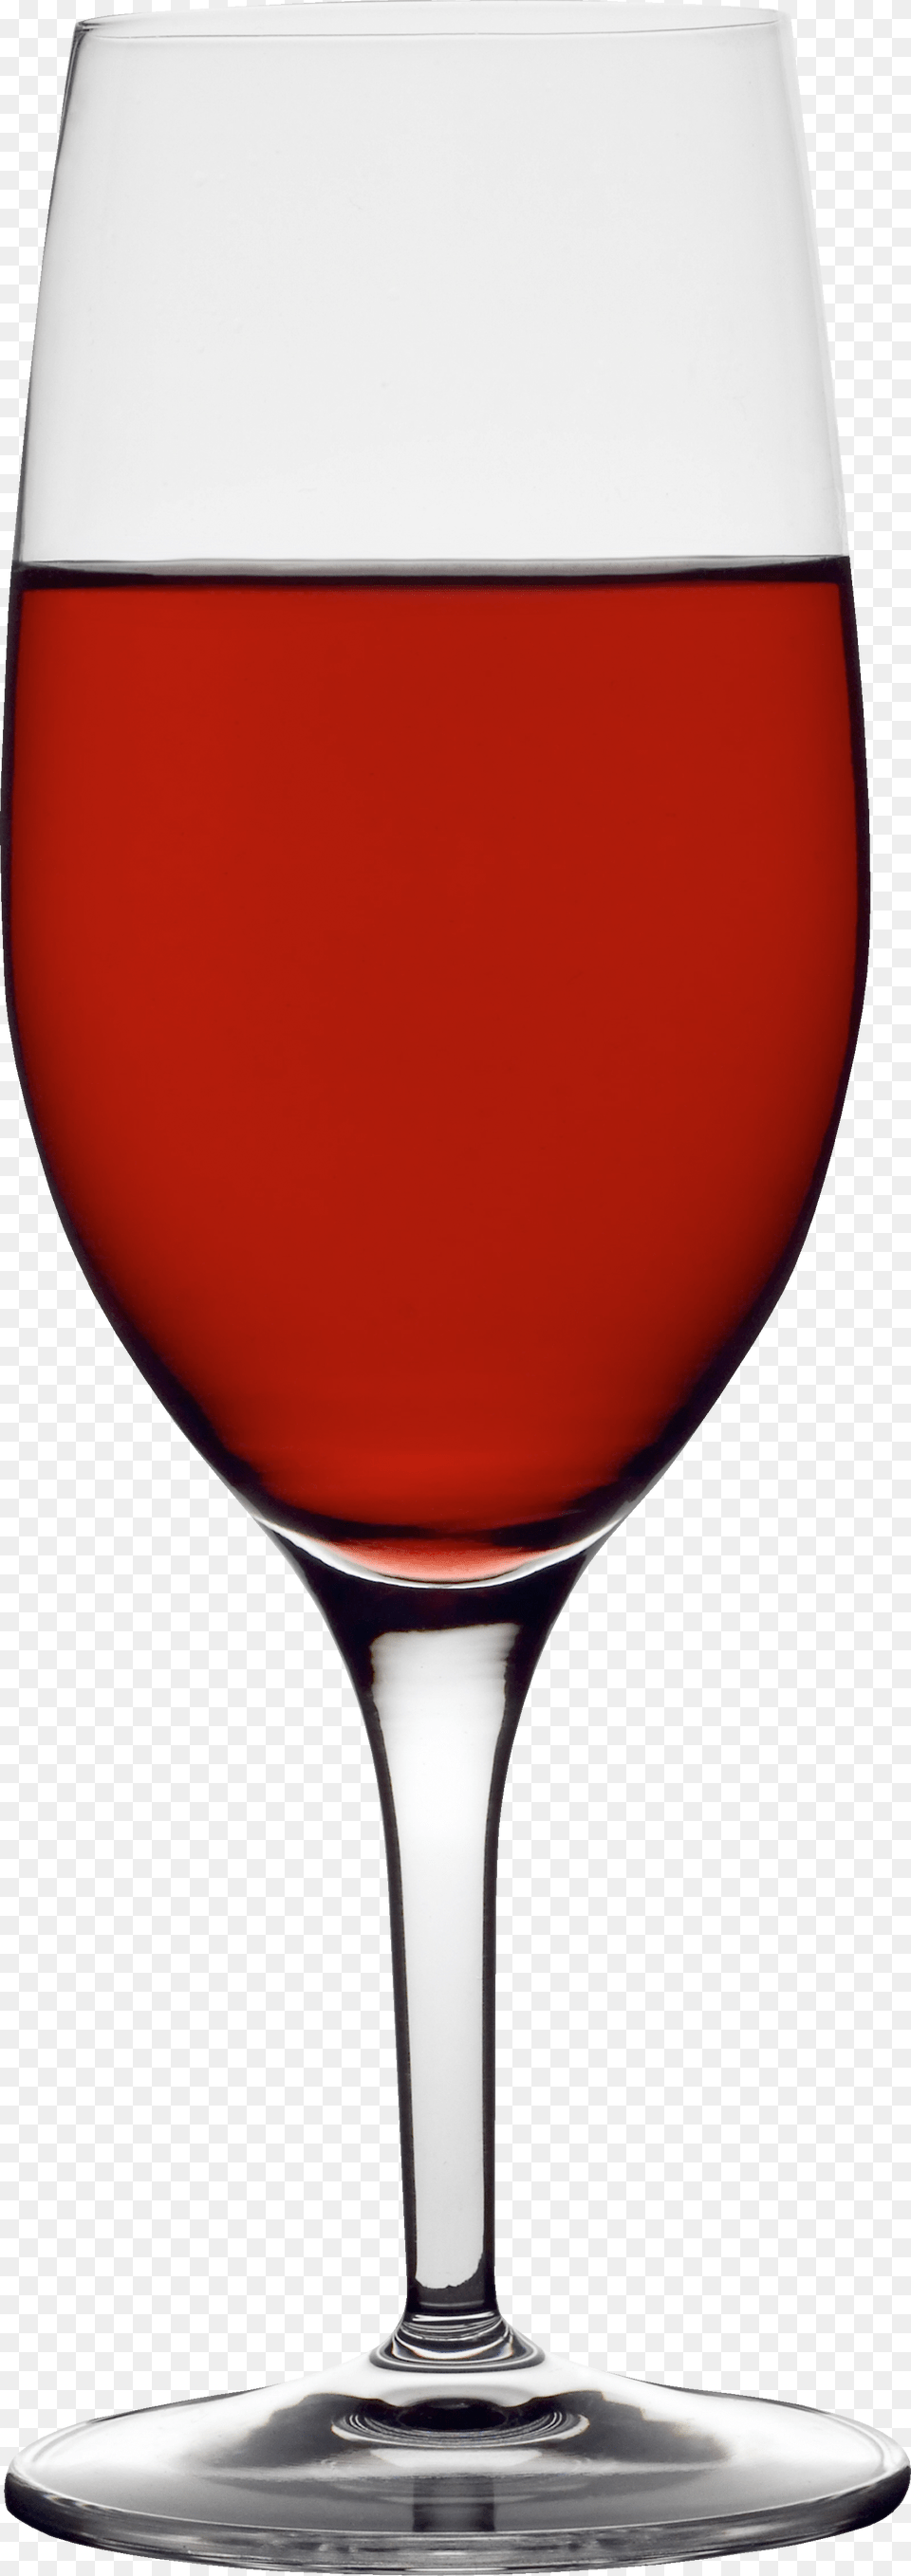 Glass Image Stakan S Vinom, Alcohol, Beverage, Liquor, Wine Png